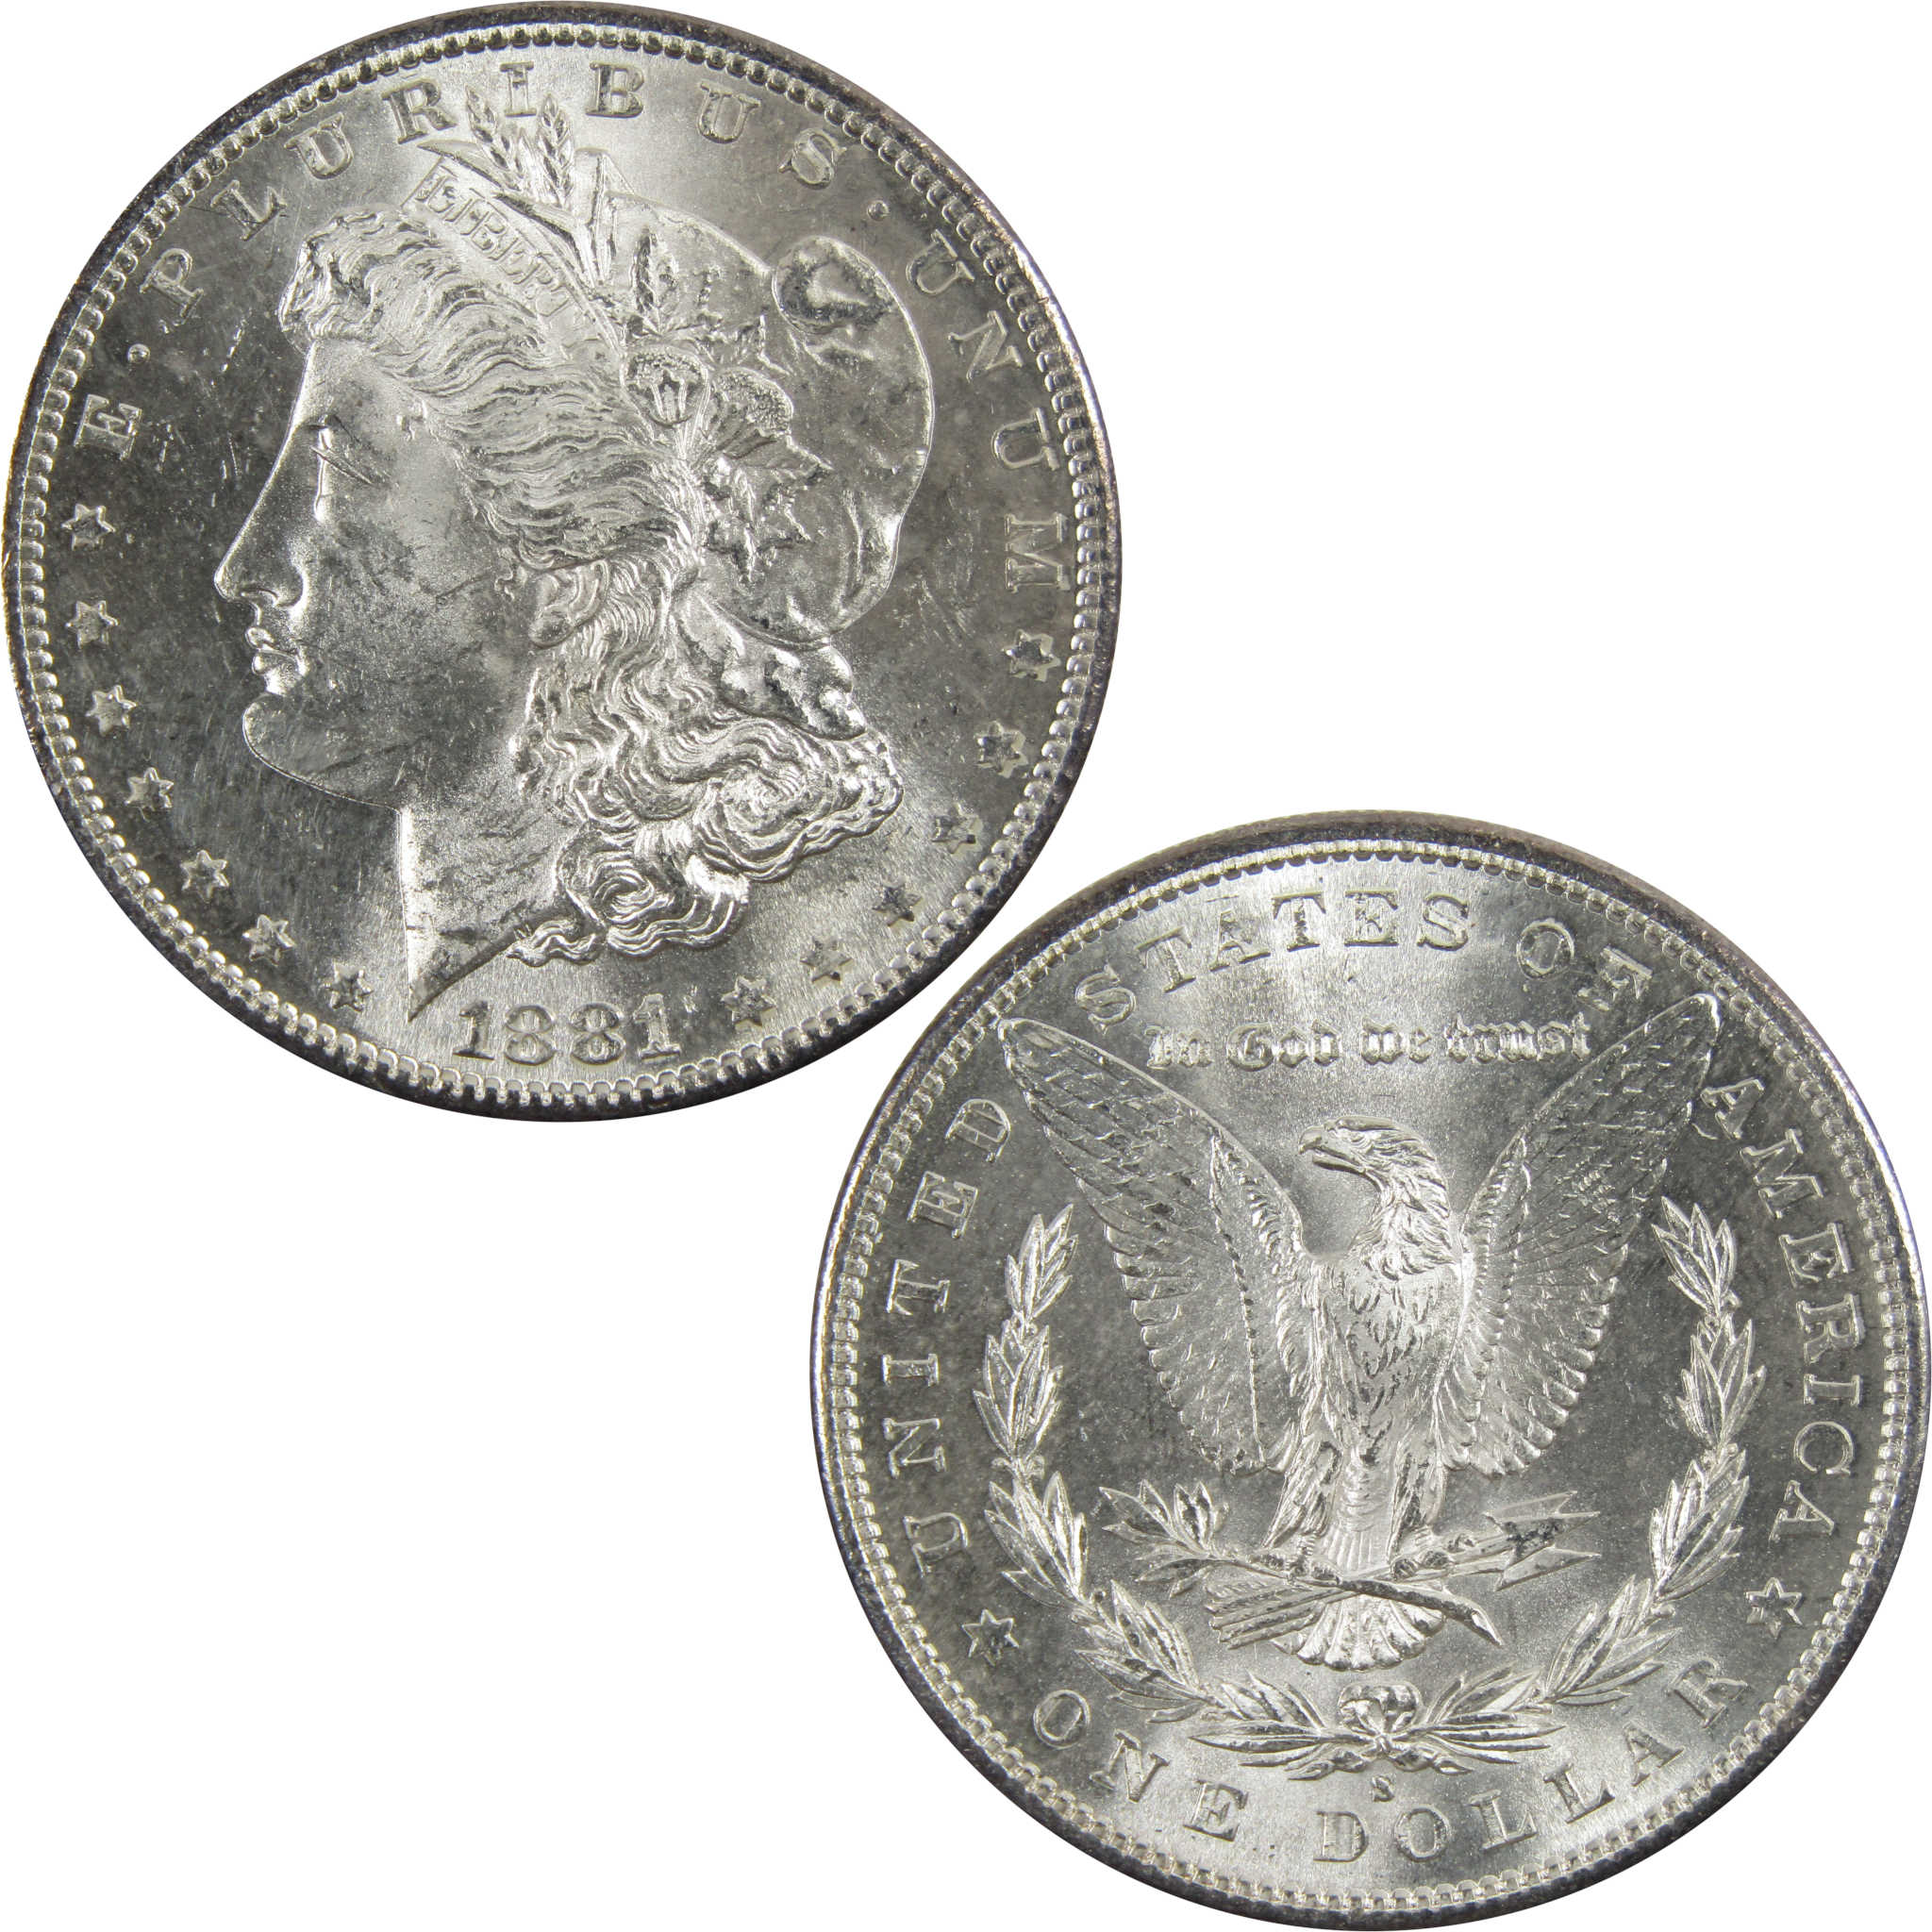 1881 S Morgan Dollar BU Uncirculated 90% Silver $1 Coin SKU:I5326 - Morgan coin - Morgan silver dollar - Morgan silver dollar for sale - Profile Coins &amp; Collectibles